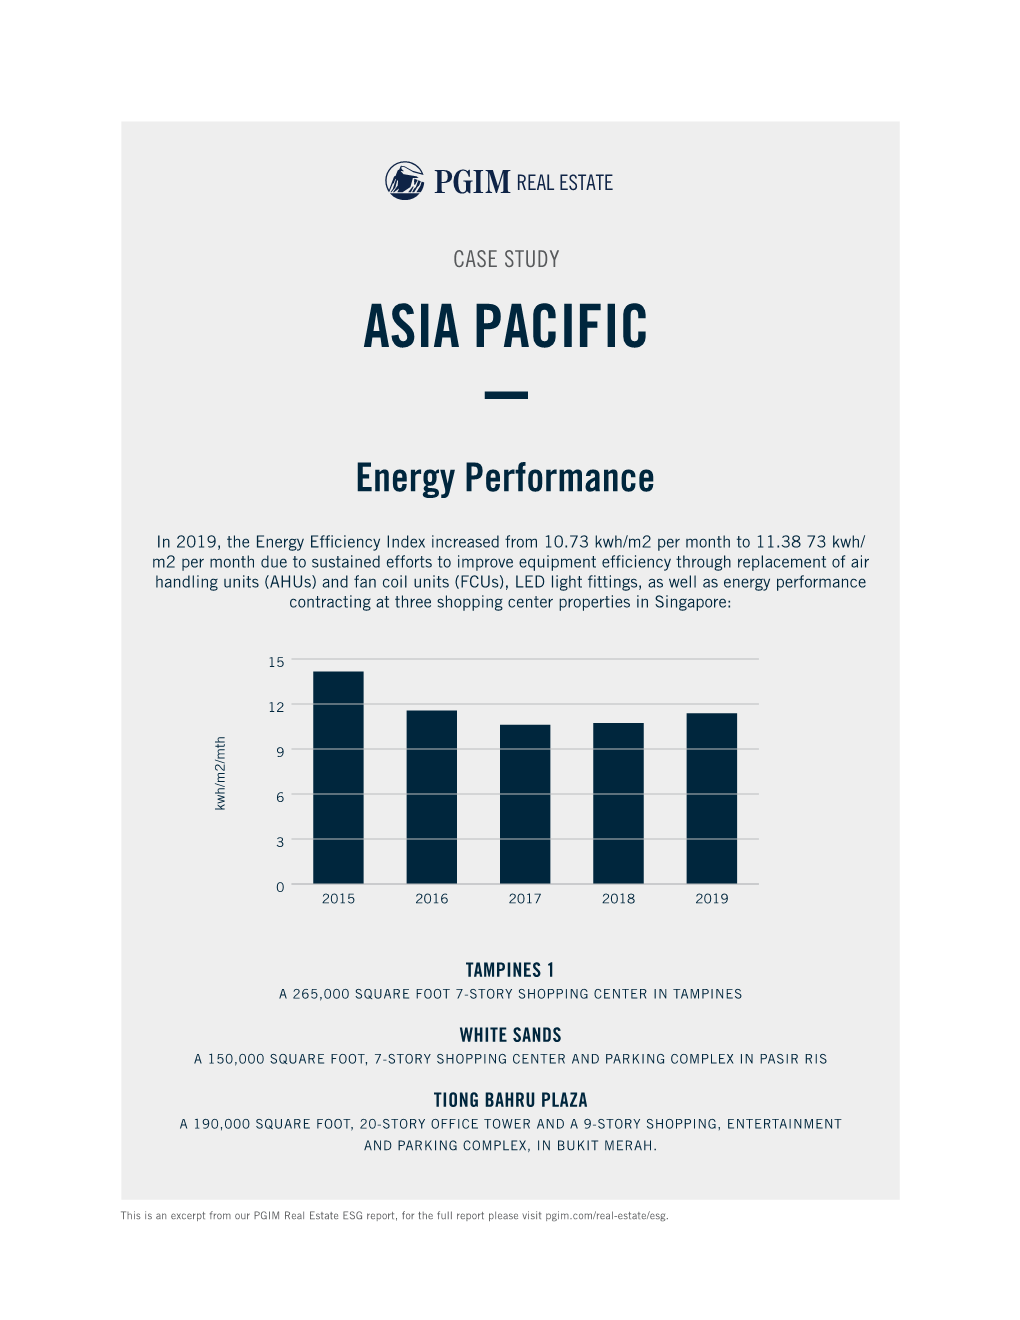 PGIM Real Estate Asia Pacific Case Study